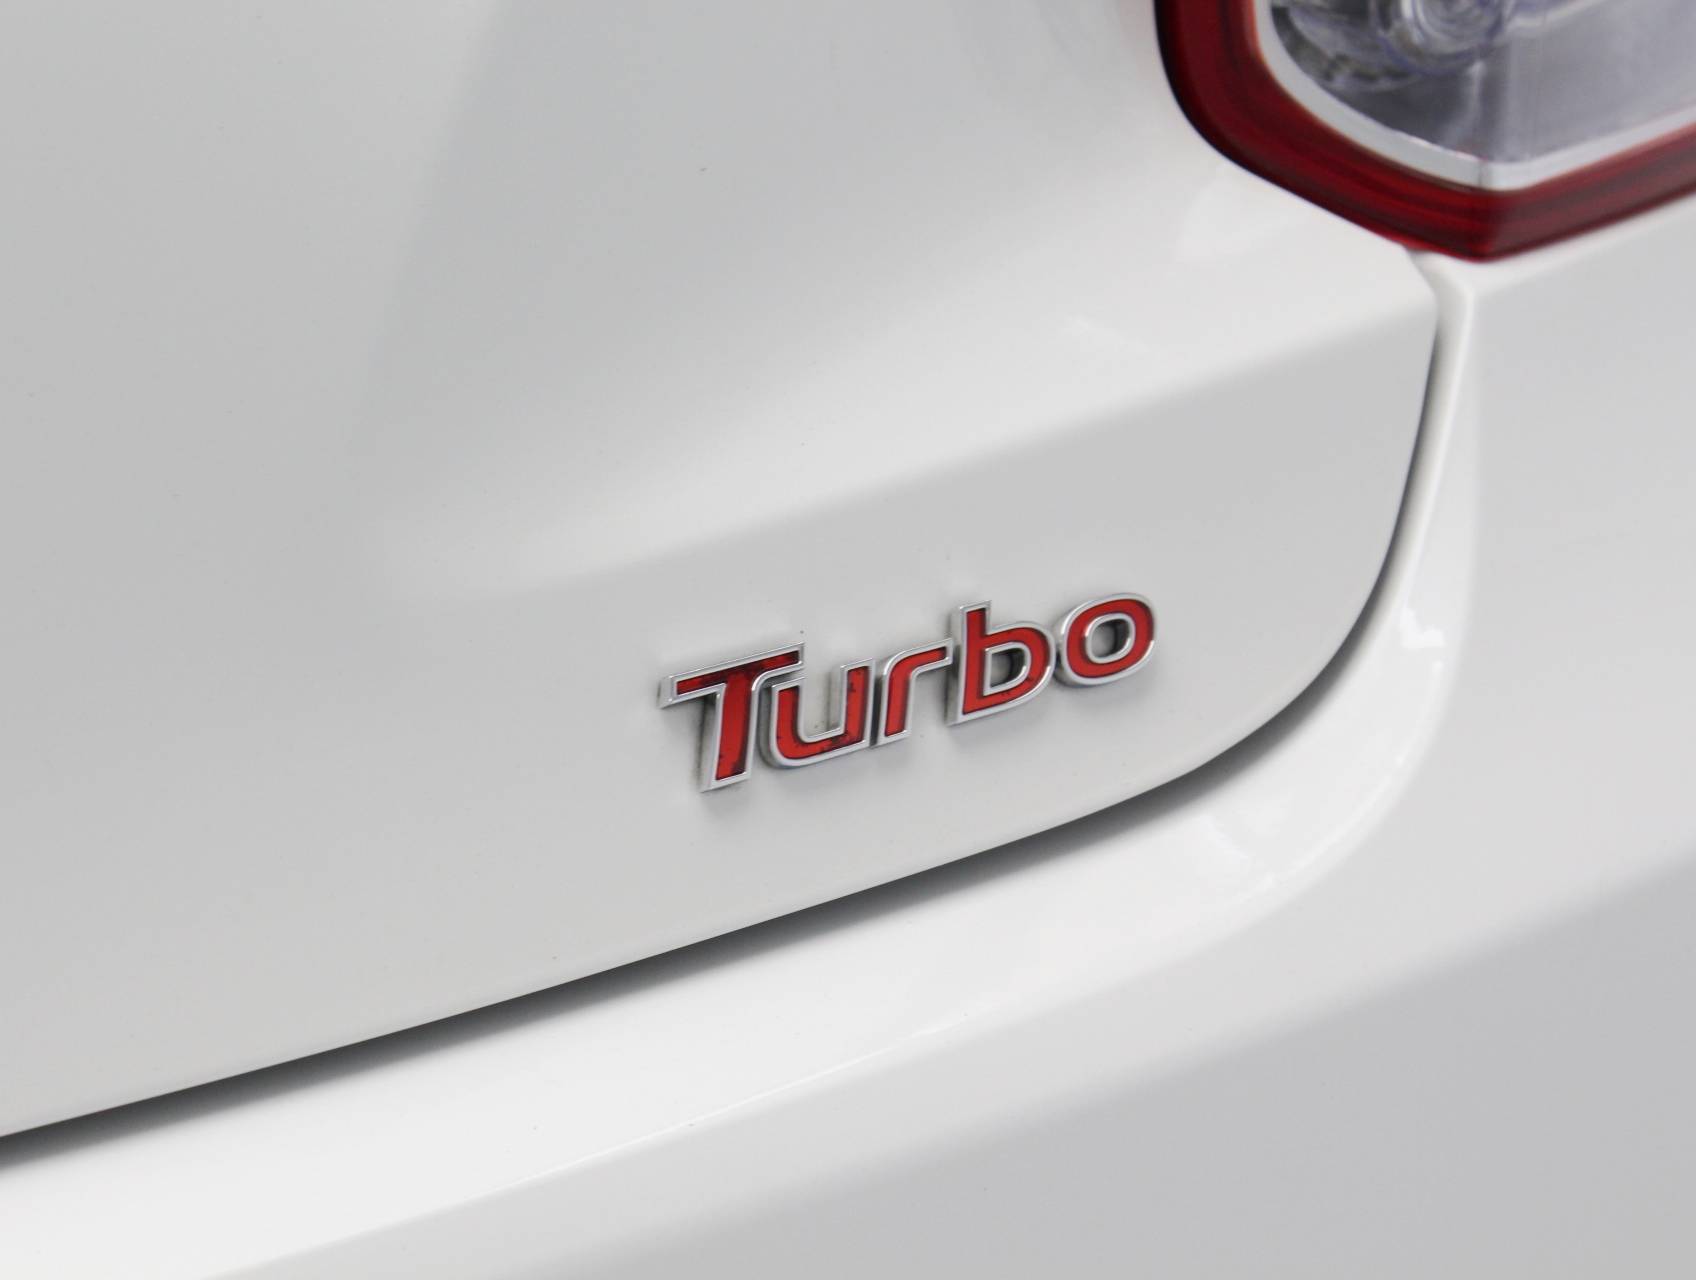 Florida Fine Cars - Used HYUNDAI VELOSTER 2015 WEST PALM Turbo